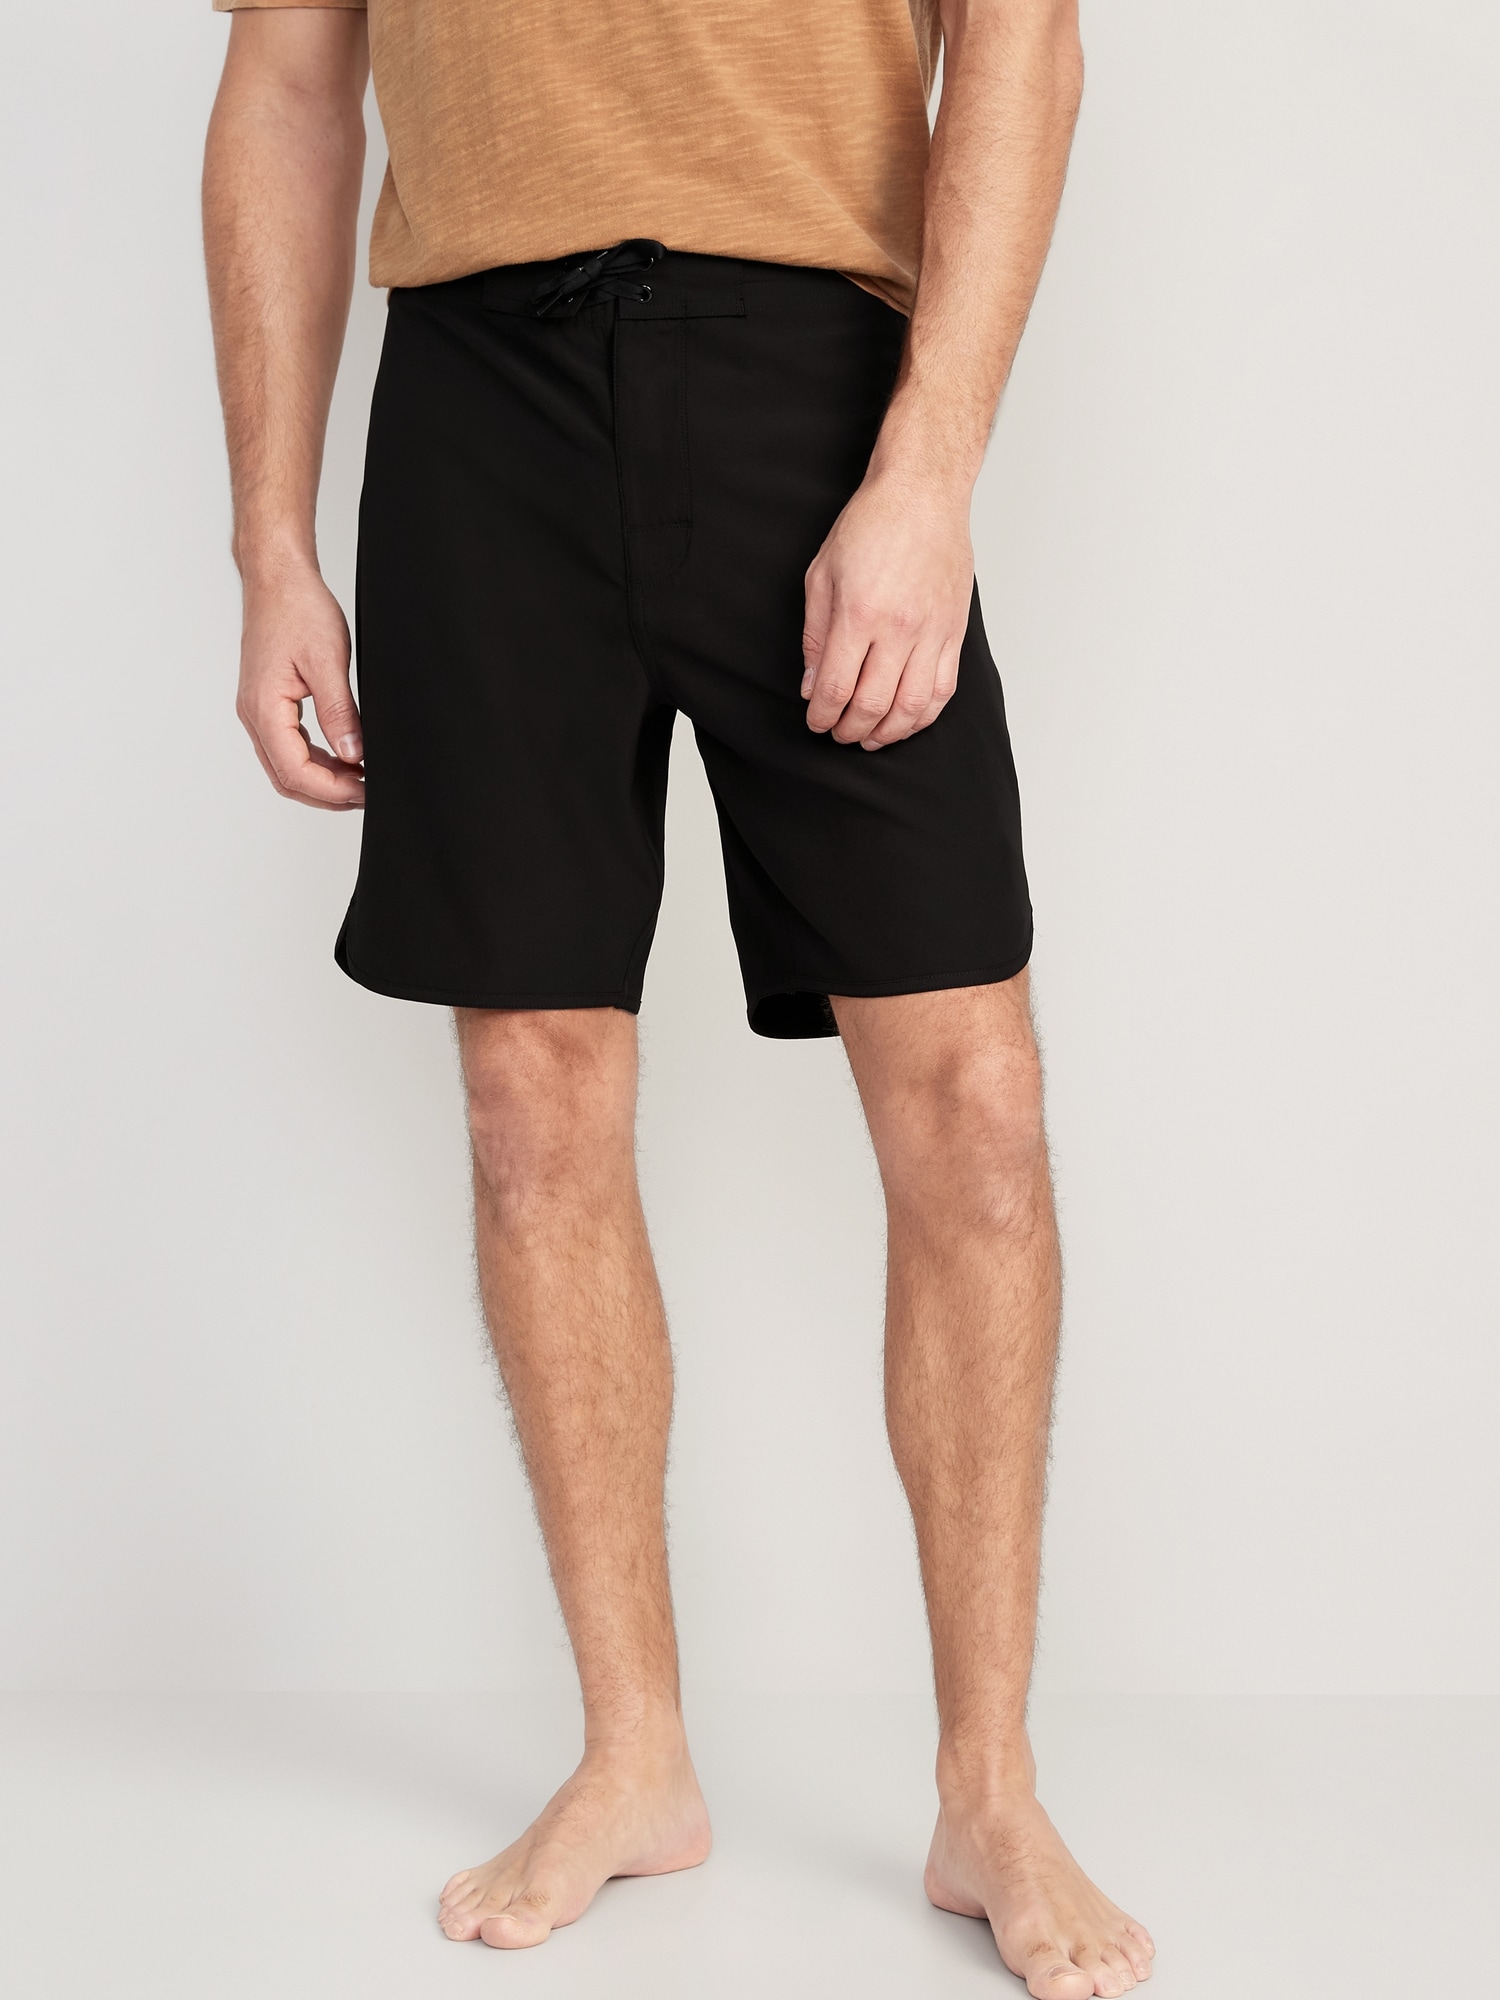 Old Navy Built-In Flex Board Shorts for Men -- 8-inch inseam black. 1